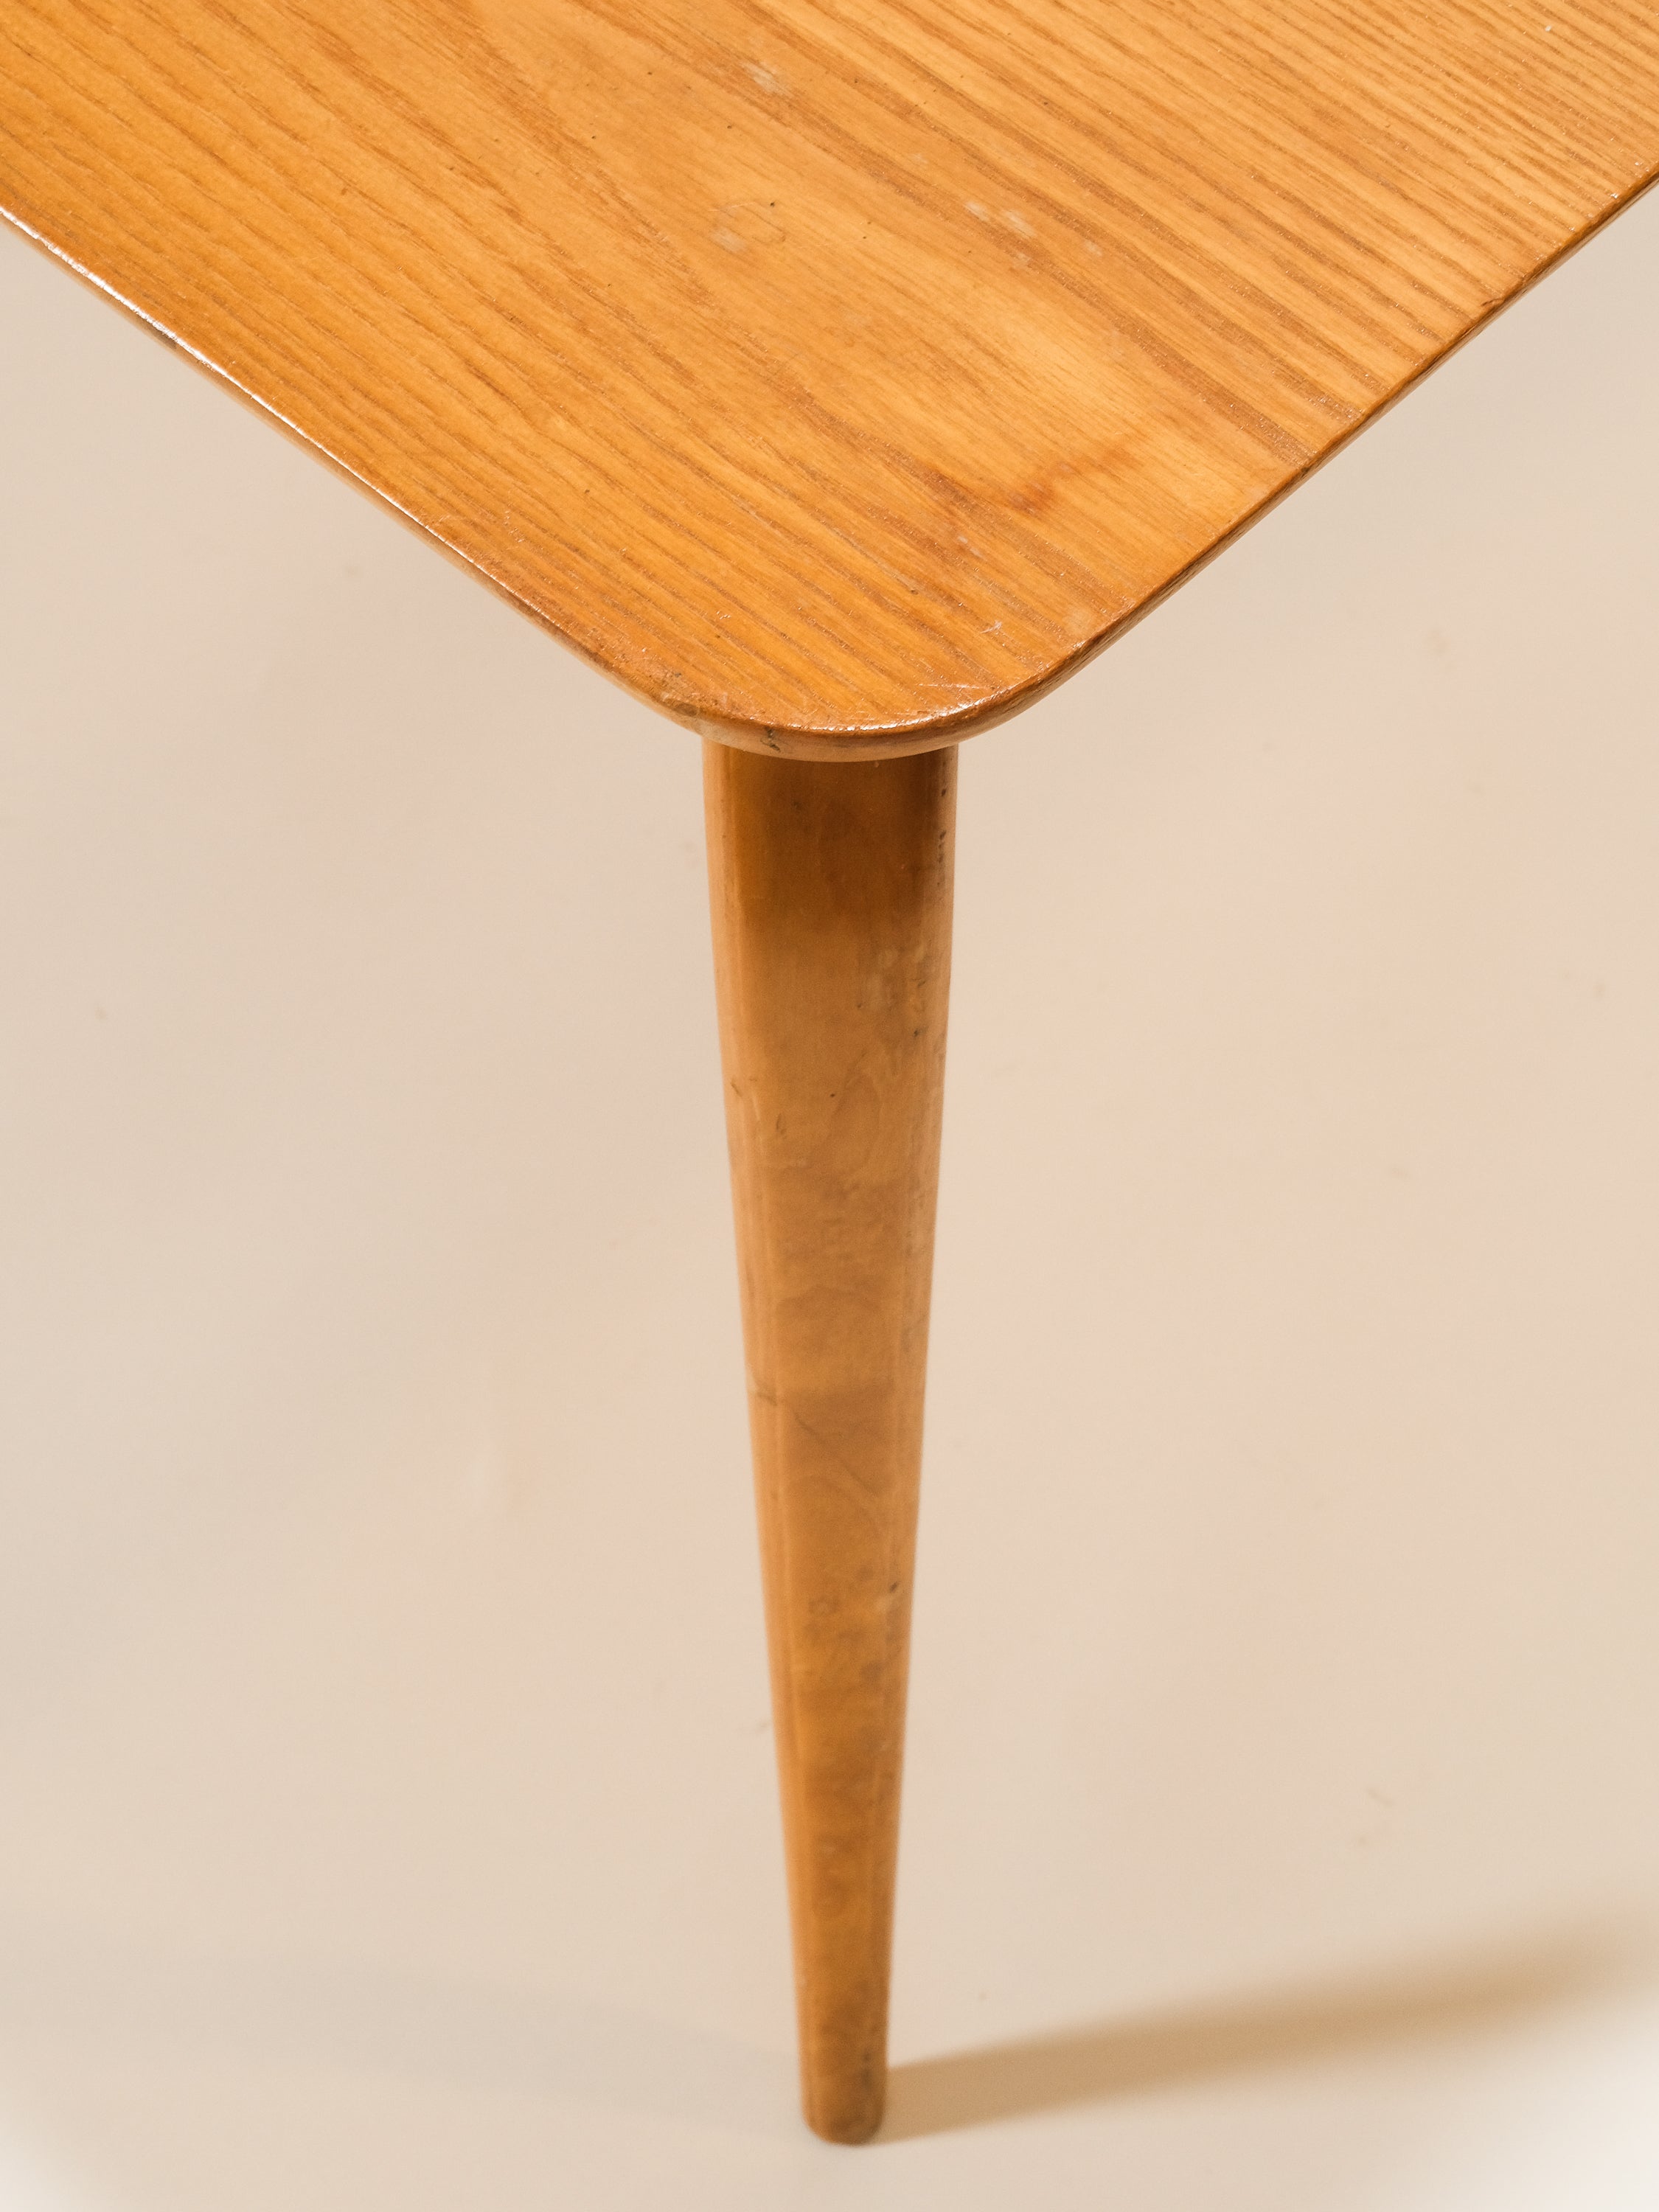 Model “Annika” Coffee Table by Bruno Mathsson for Karl Mathsson, Sweden, 1970’s